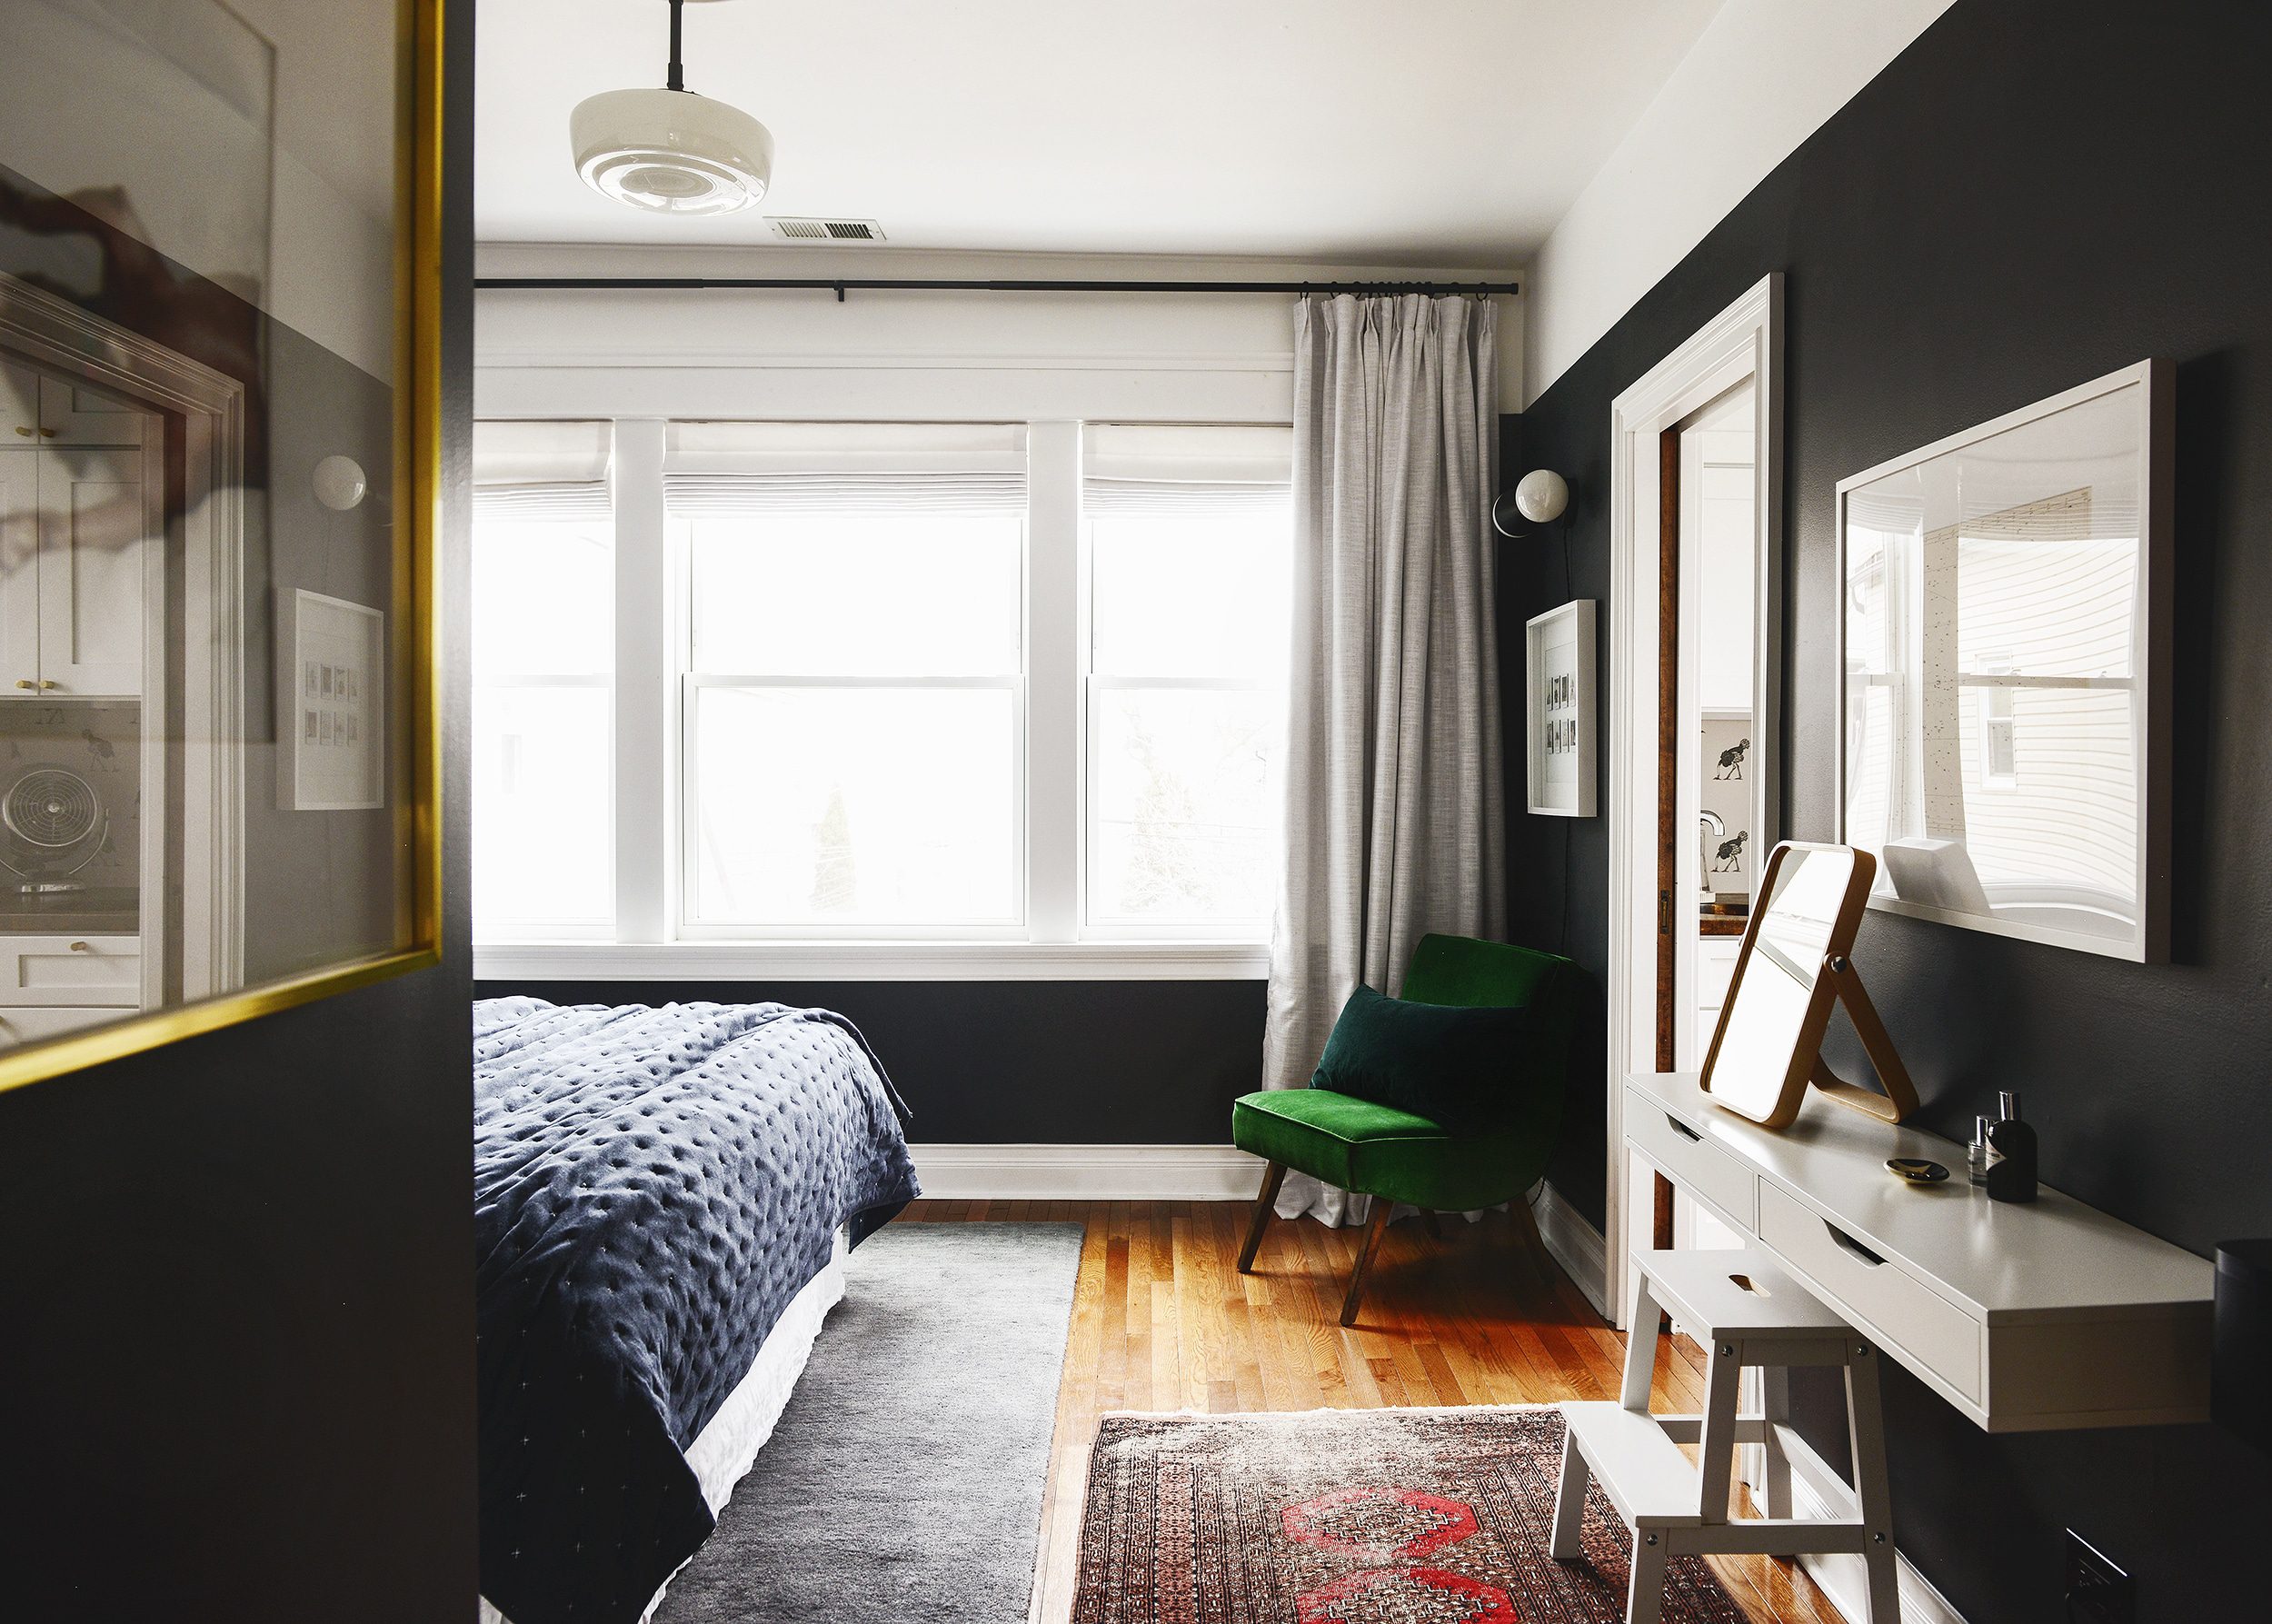 Benjamin Moore Raccoon Fur walls in a master bedroom | via Yellow Brick Home